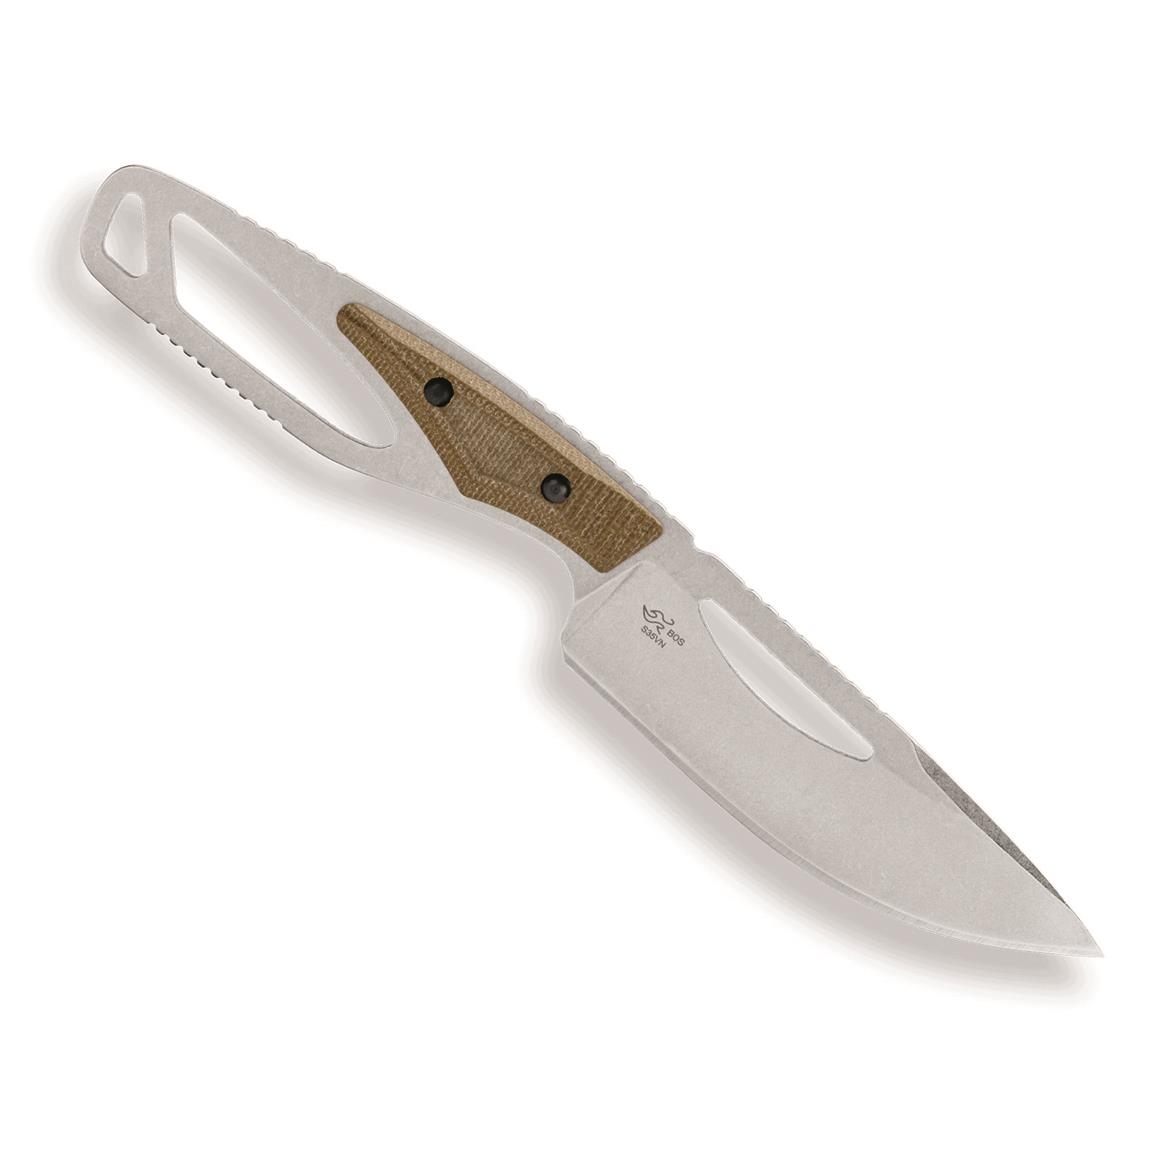 Morakniv Bushcraft Survival Knife with Fire Starter and Sharpener - 711429,  Fixed Blade Knives at Sportsman's Guide